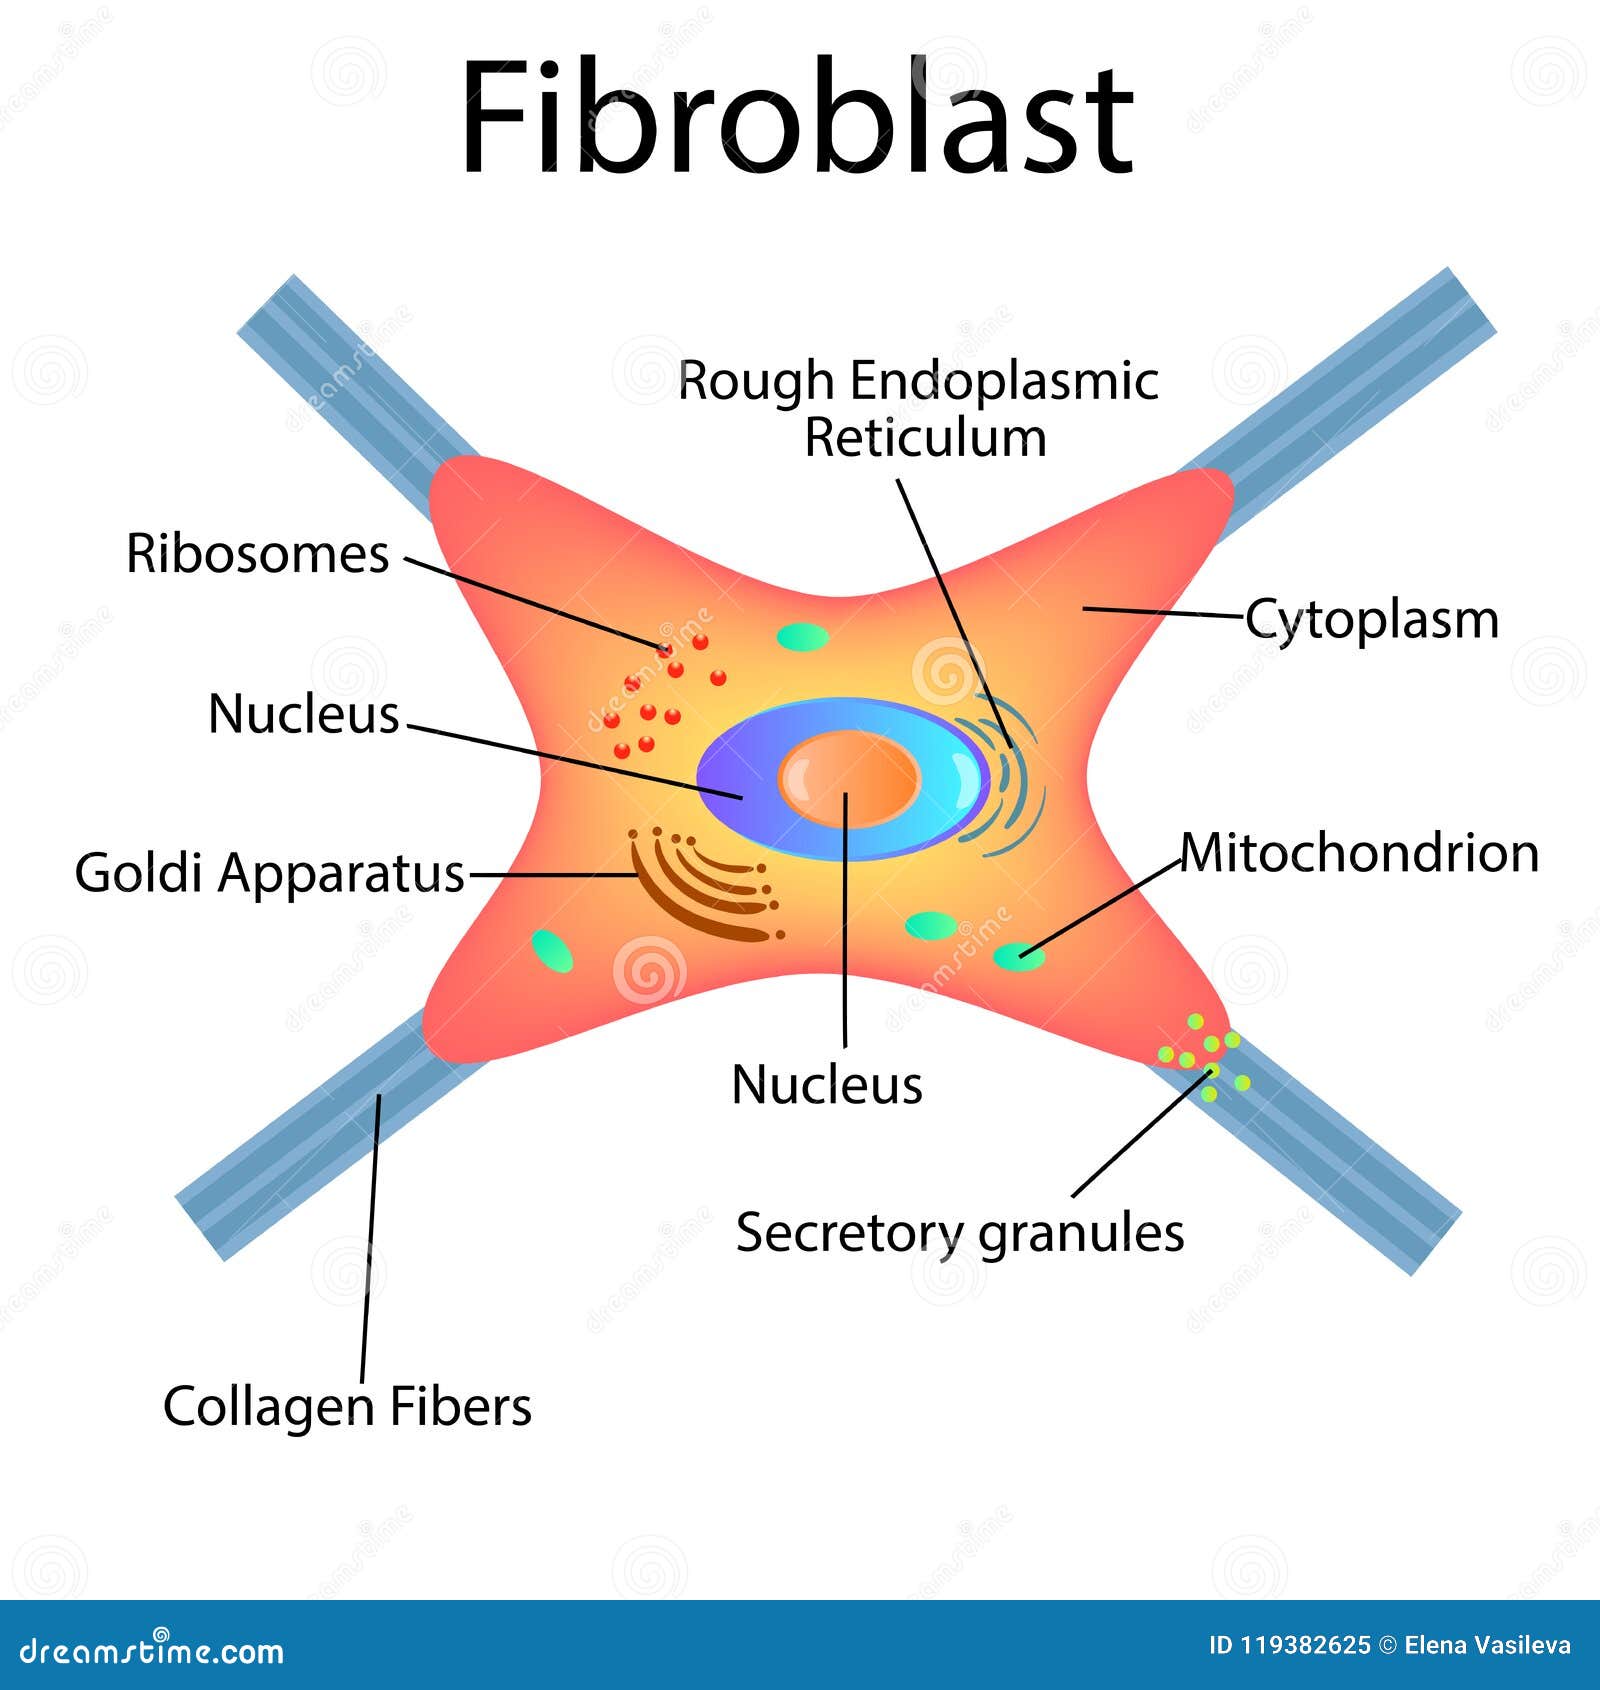 fibroblast is a dermis cell. structure of fibroblast cell.